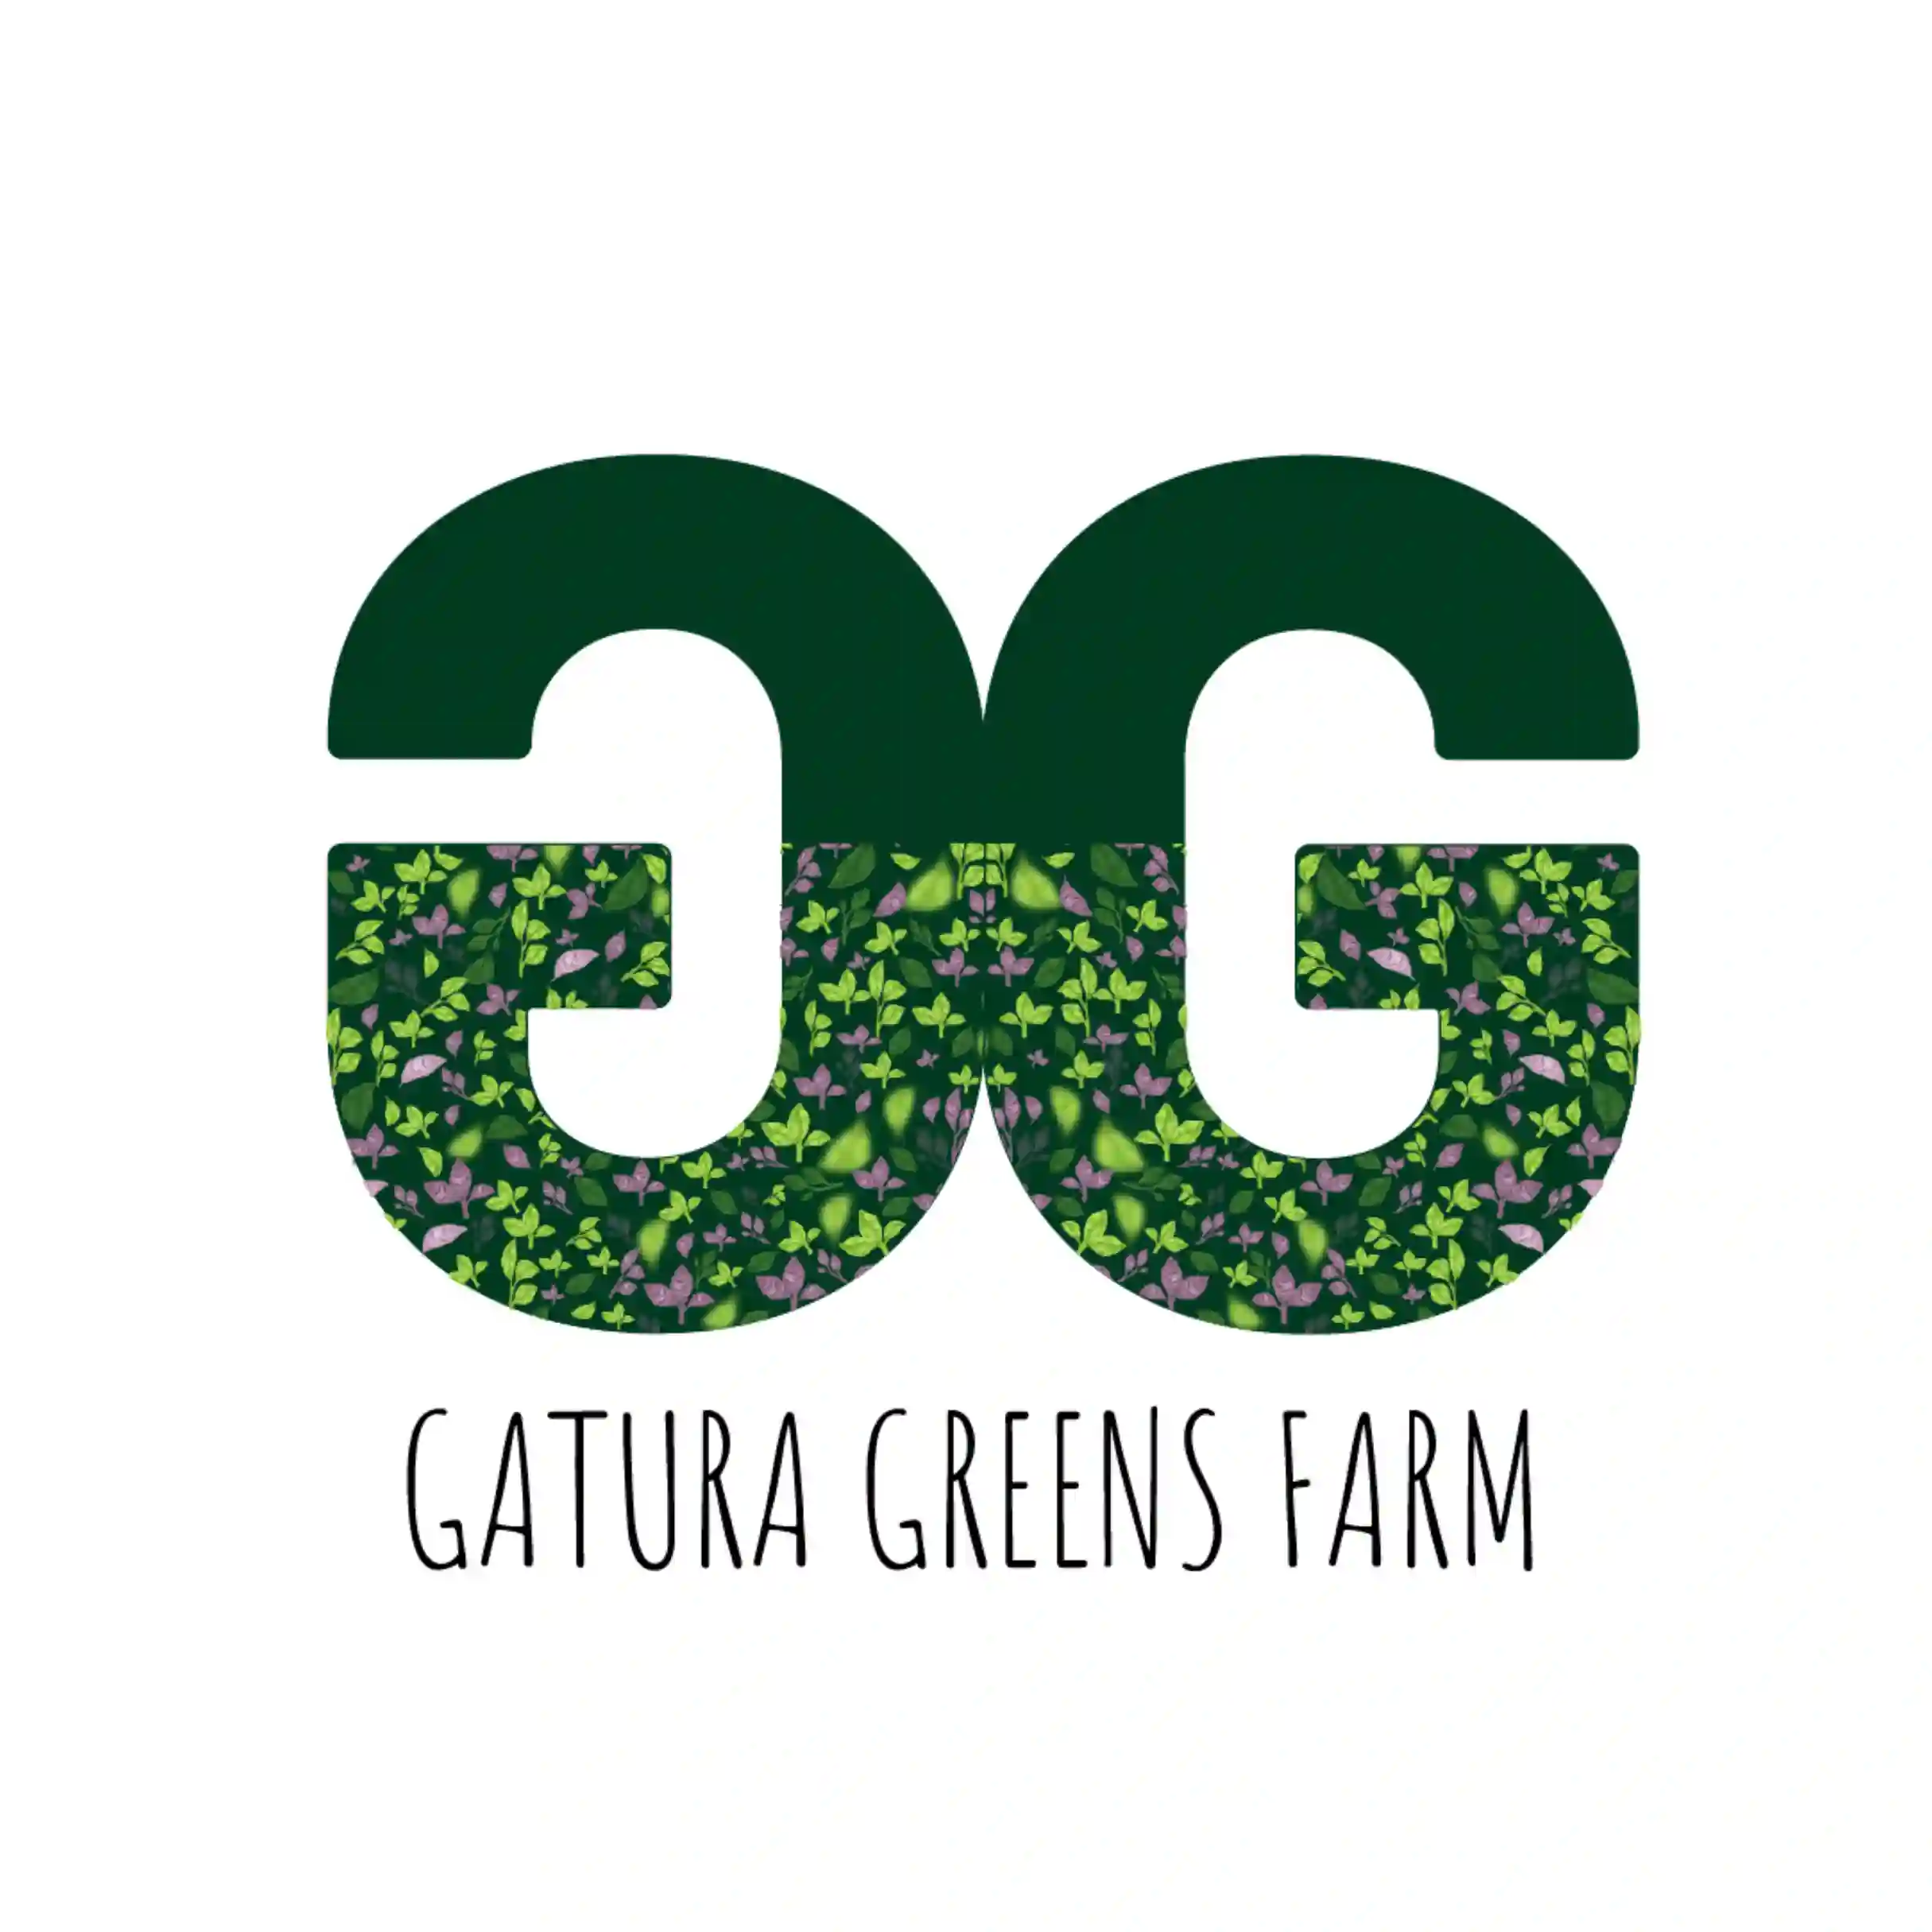 Gatura Greens Farm